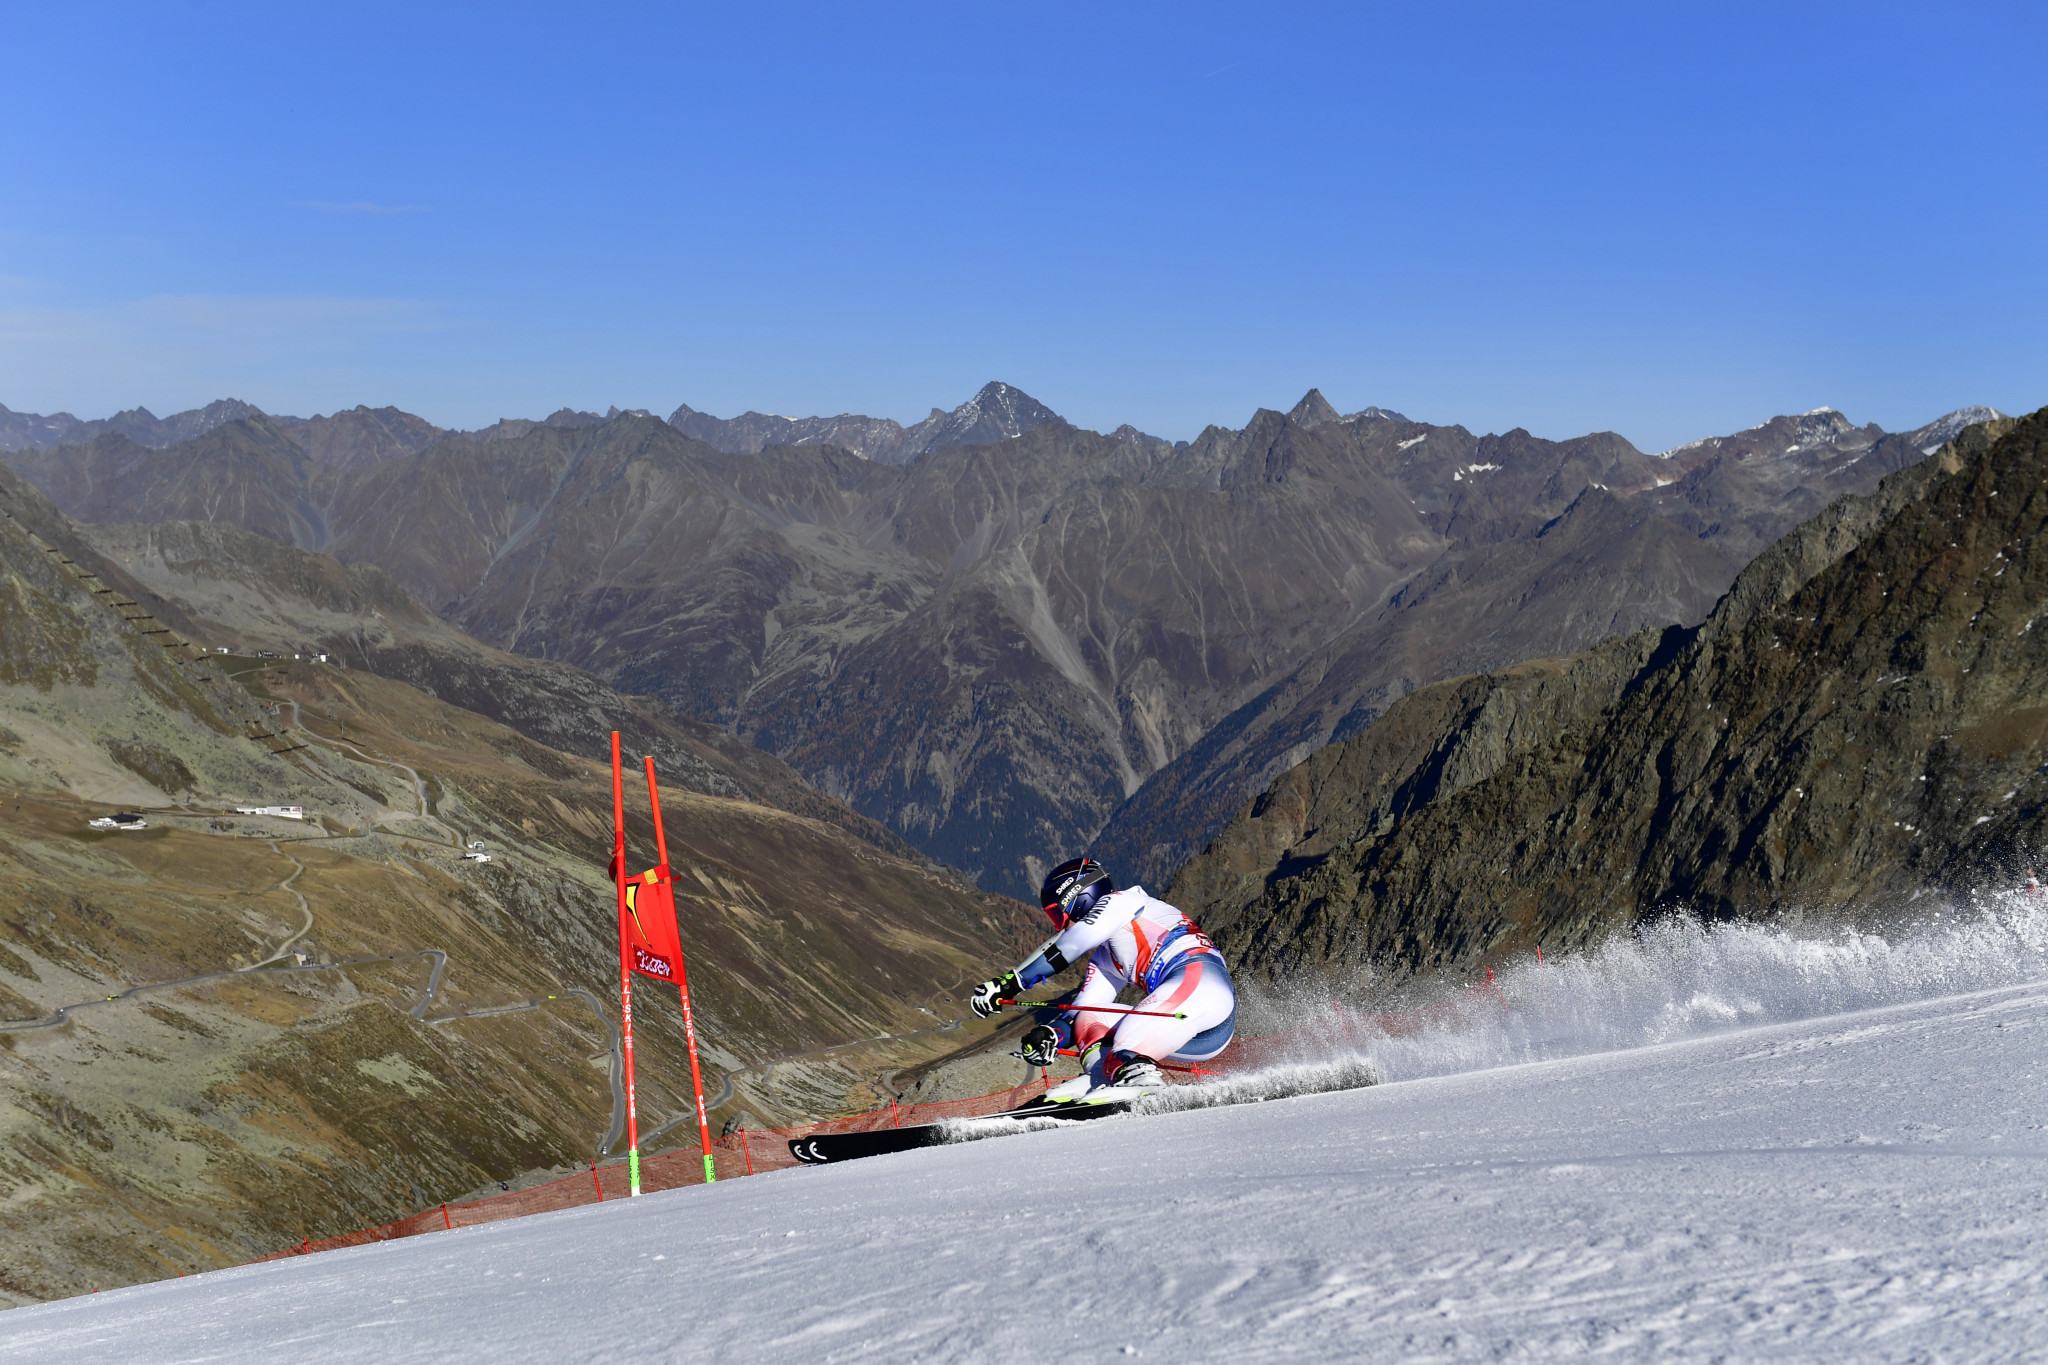 Sölden in Austria is set to host the FIS Alpine Ski World Cup season opener ©Getty Images